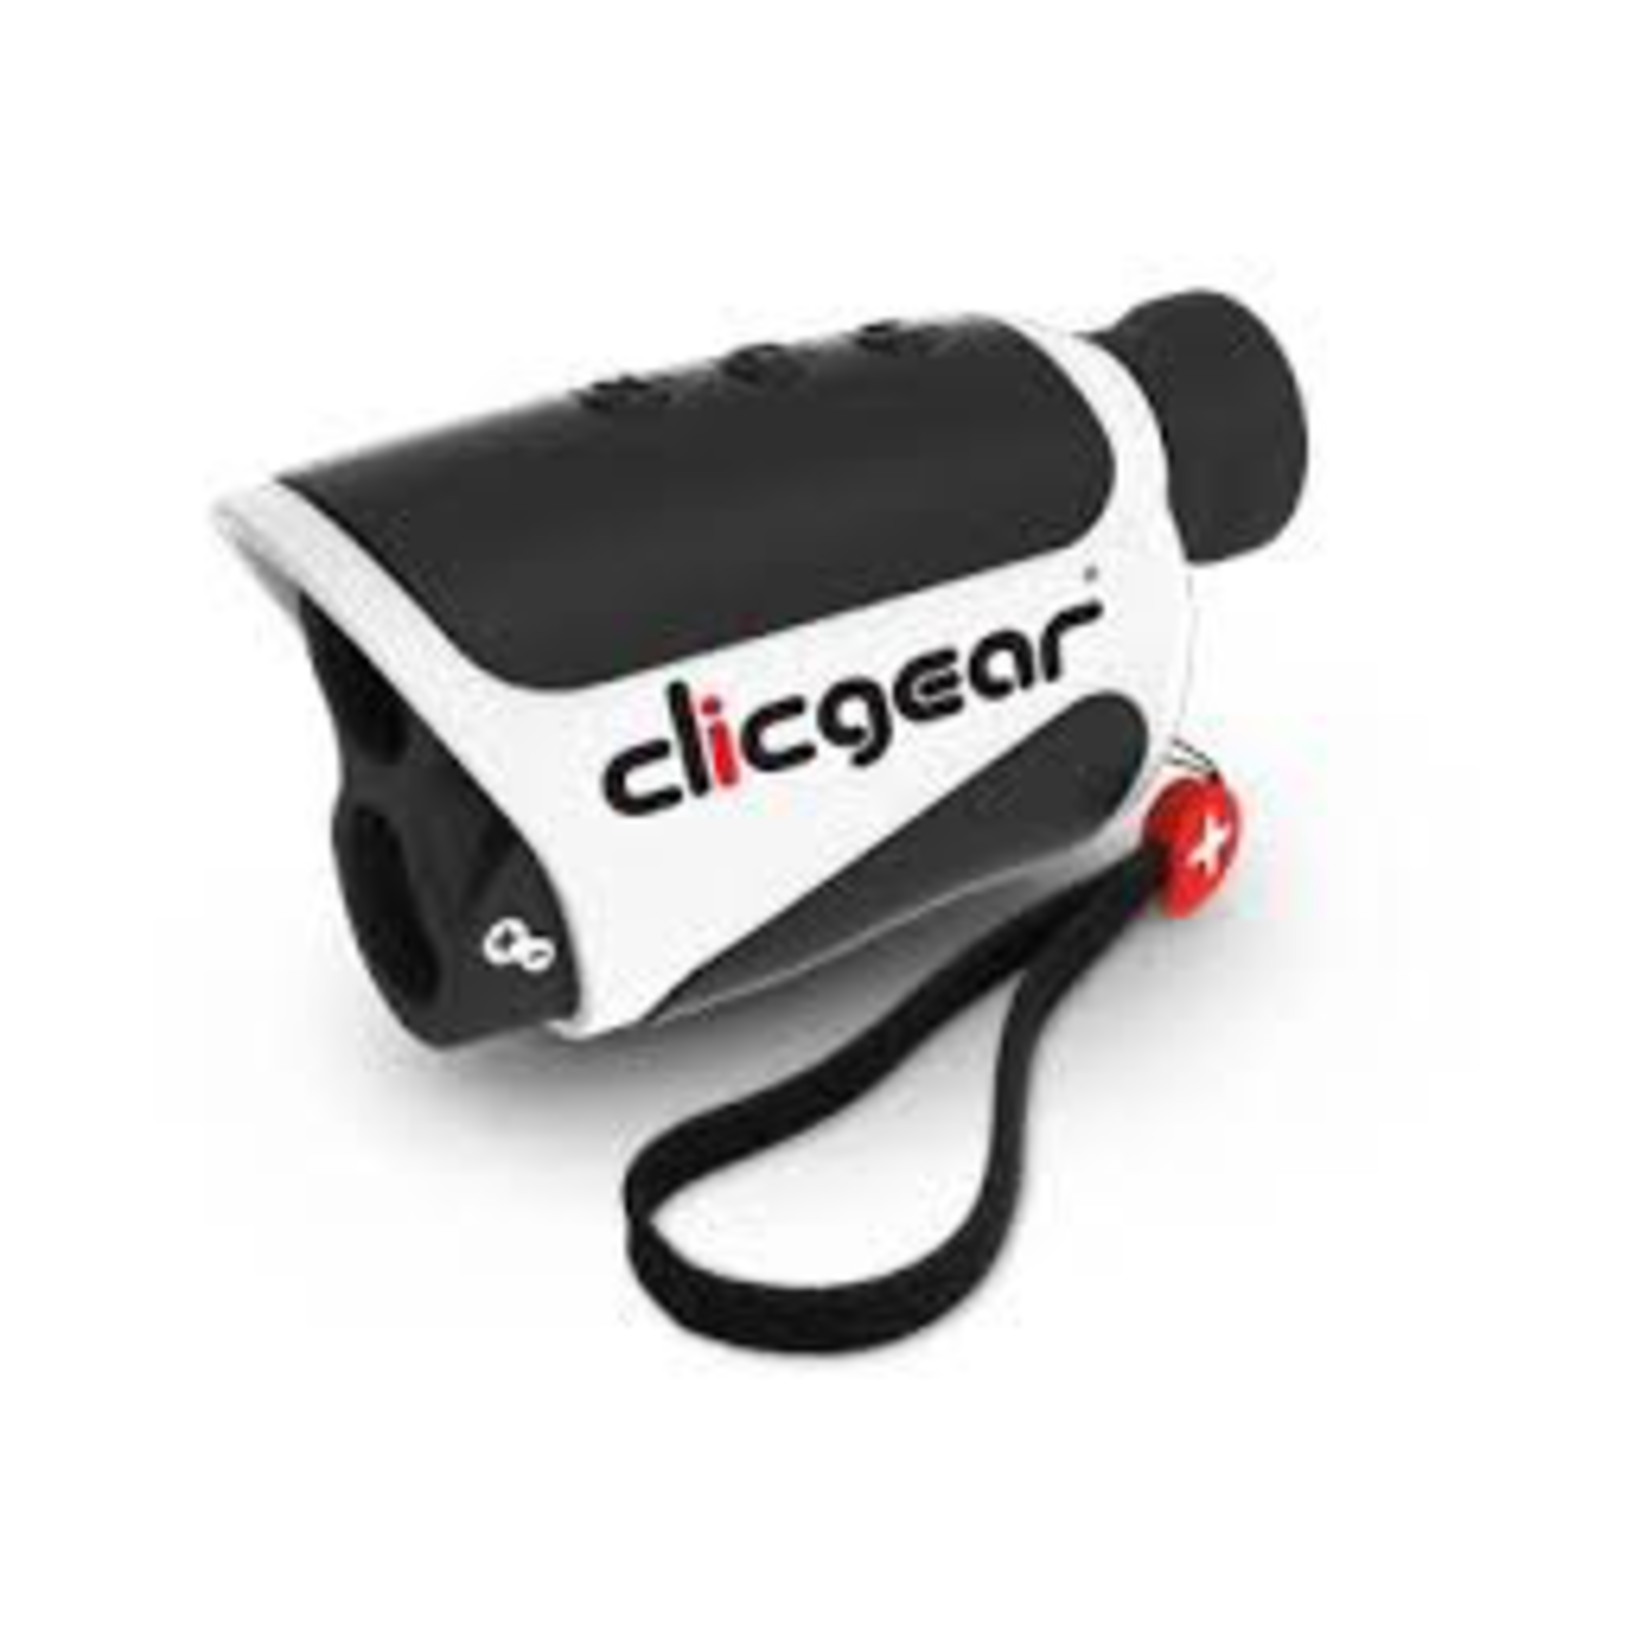 Clicgear Clic Gear Range Finder